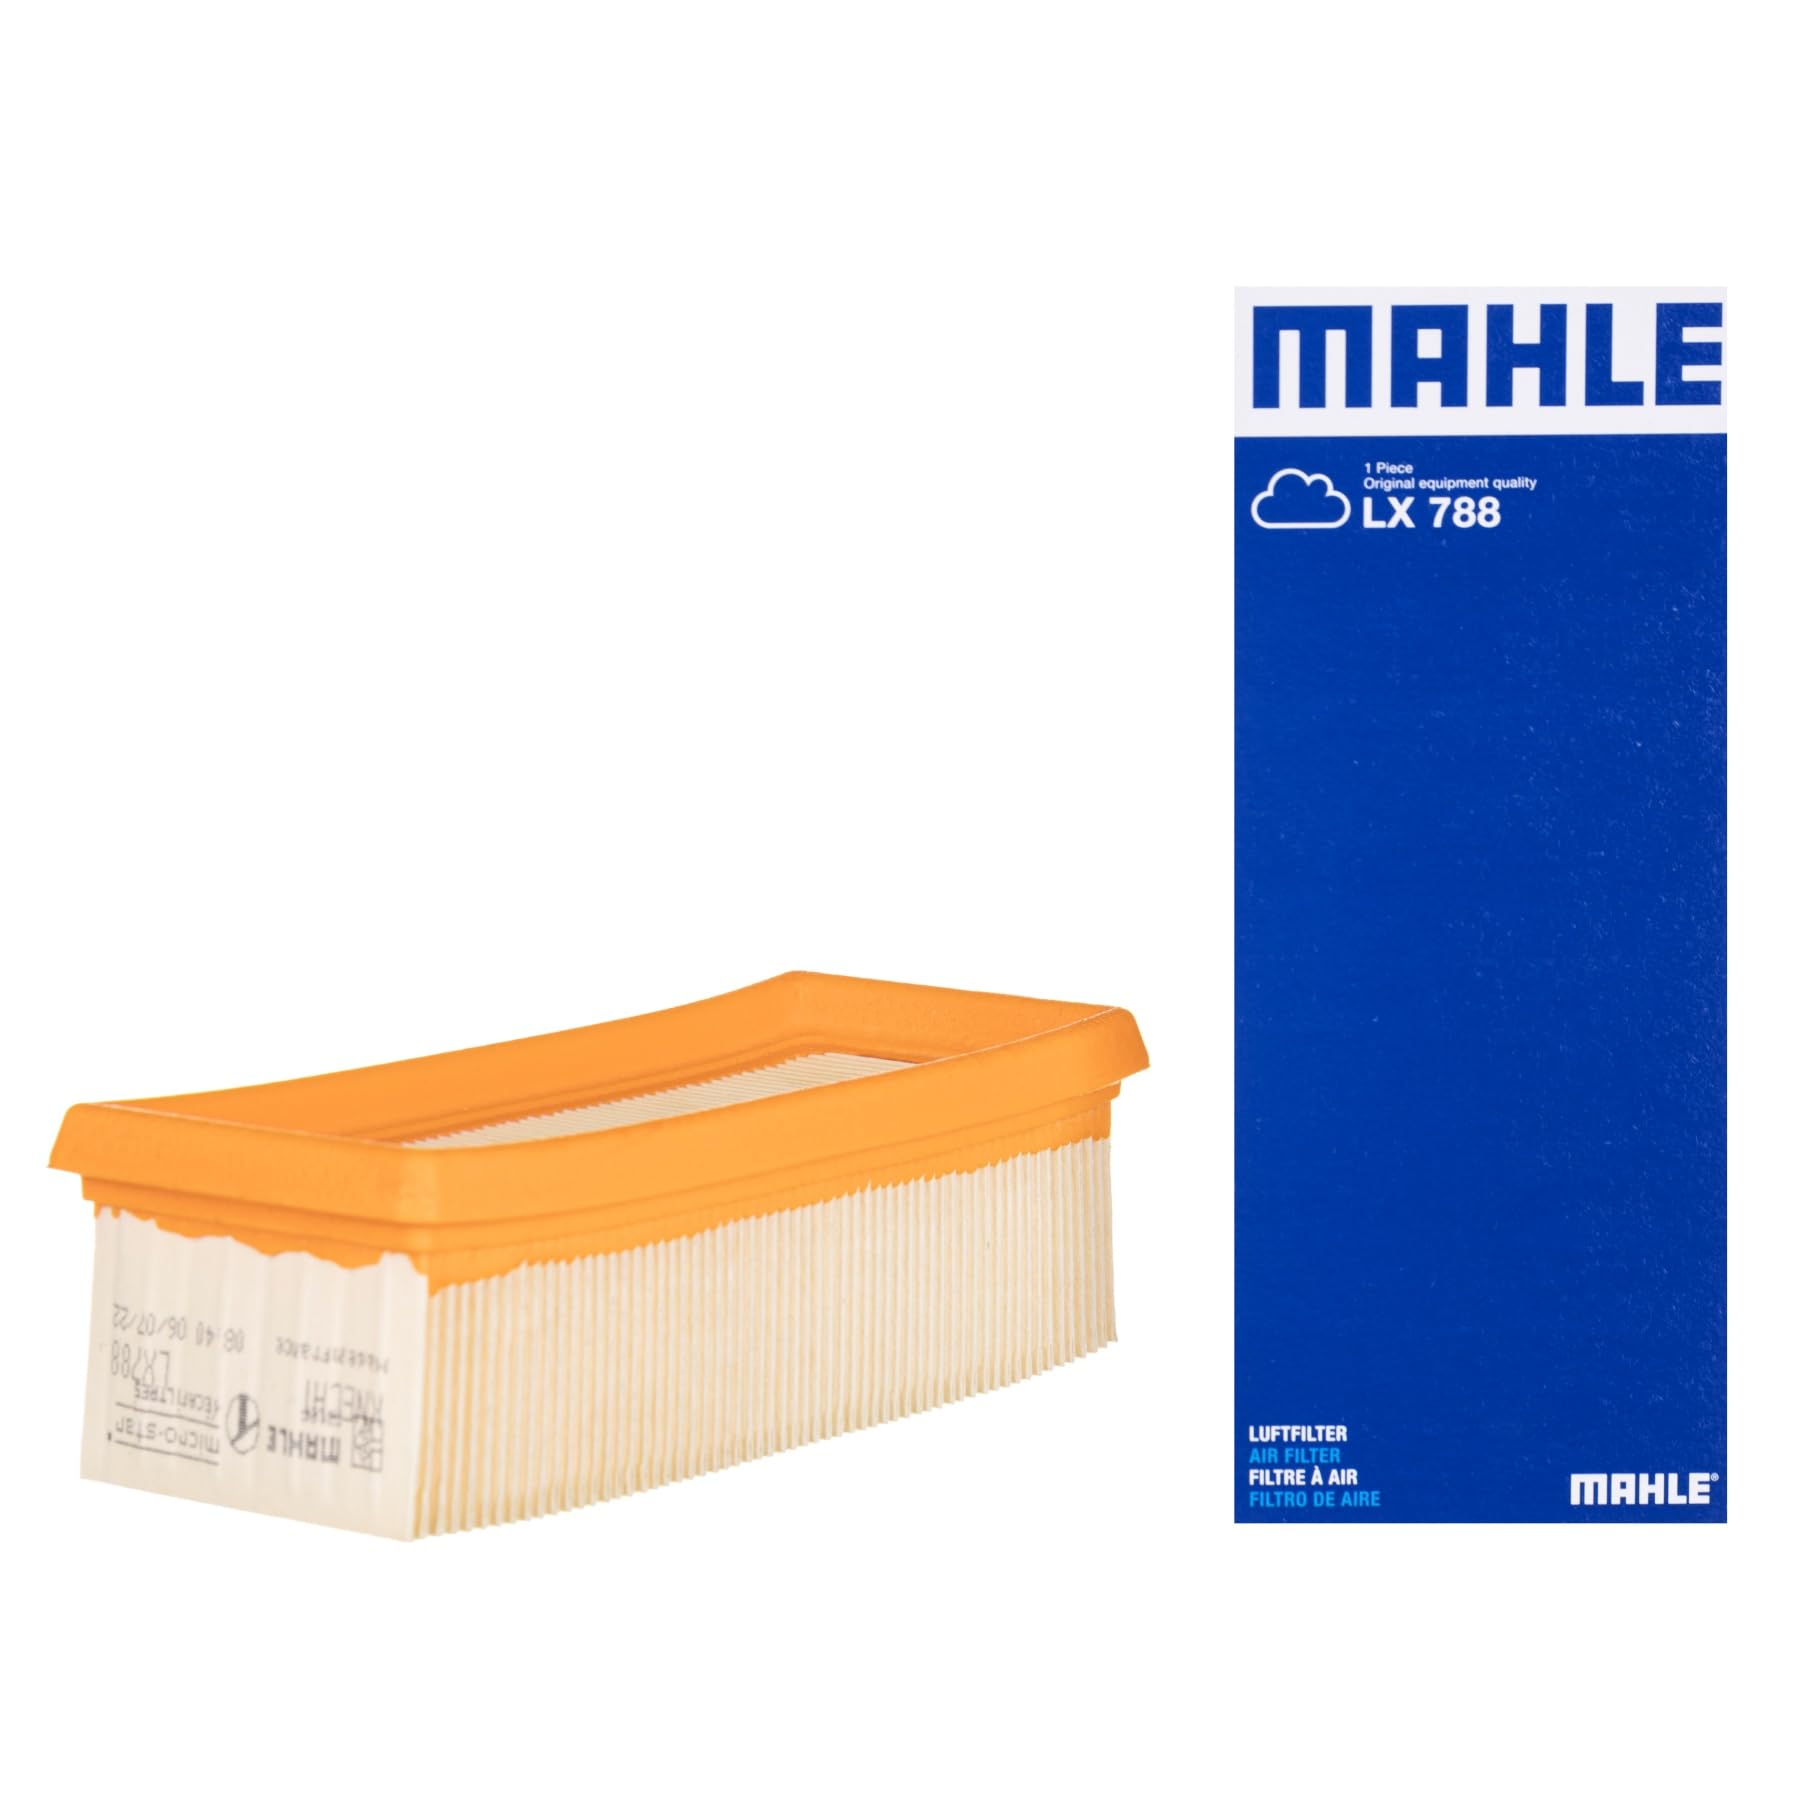 Mahle Knecht LX 788 Luftfilter von MAHLE